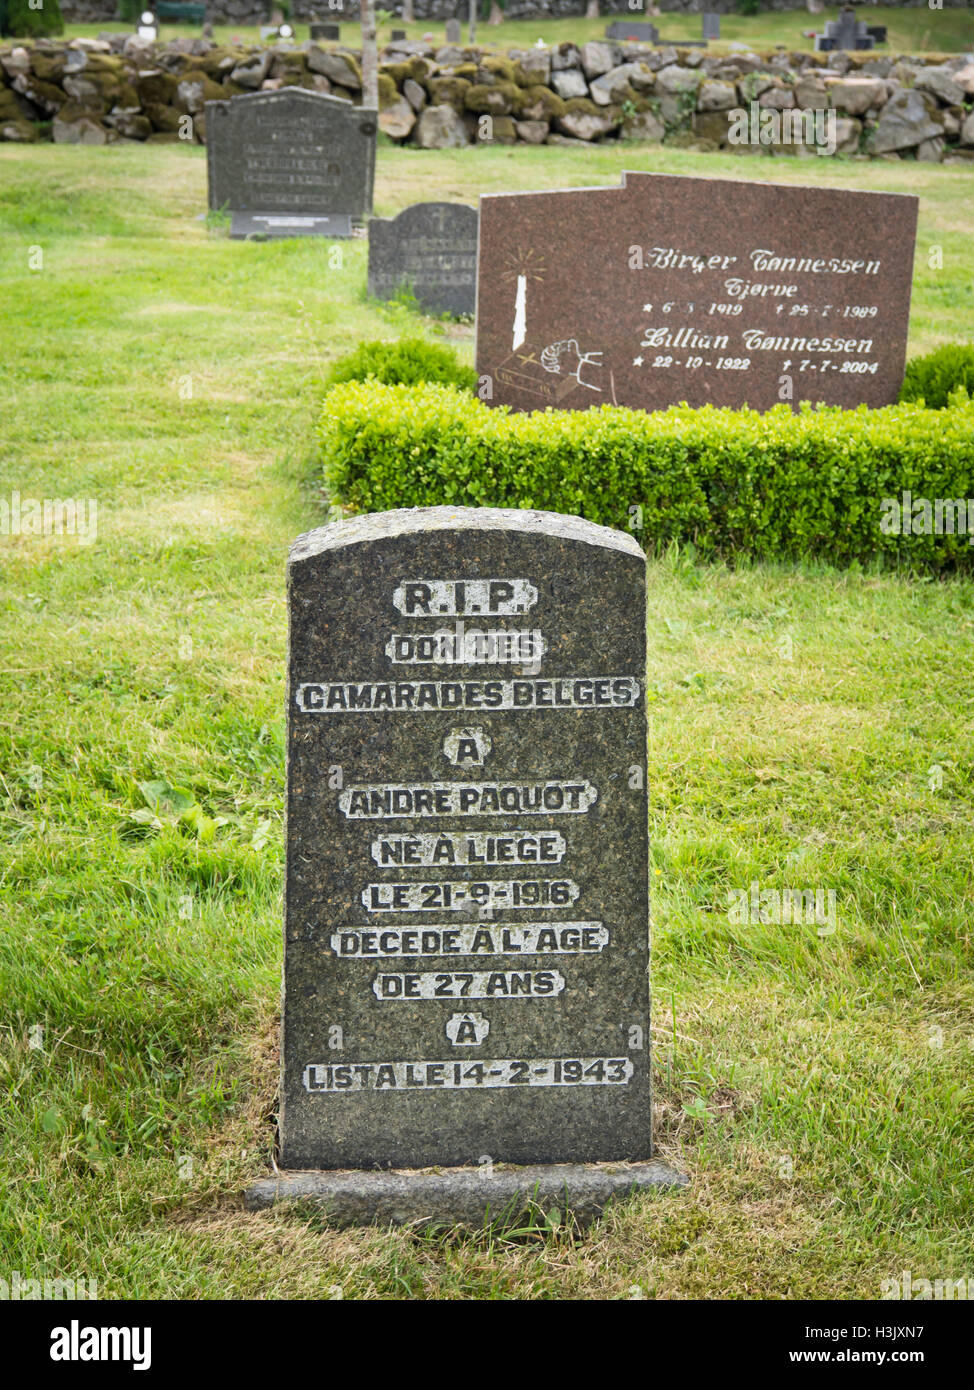 Gravestone in Lista cemetery, Vanse Vest-Agder Norway commemorating Belgian soldiers fallen in WWII Stock Photo